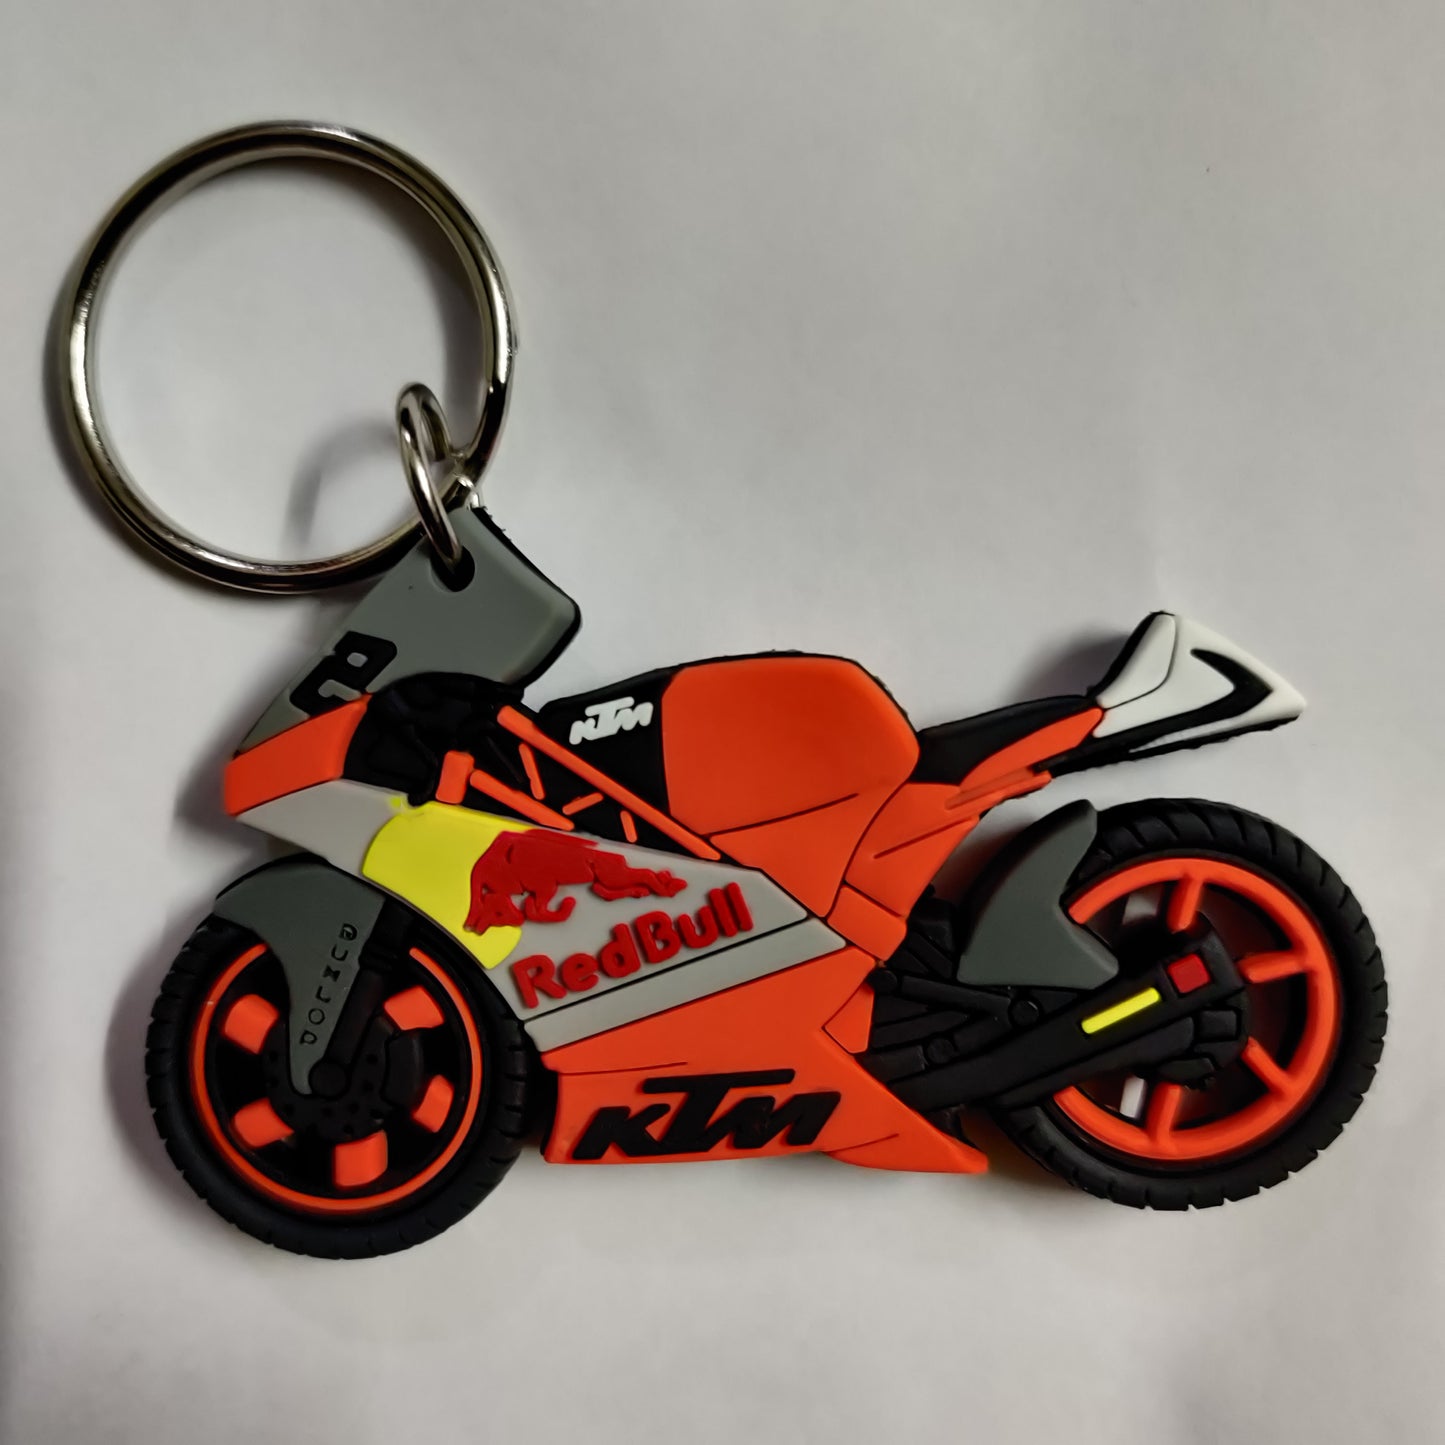 3D KTM Rc Key Chain